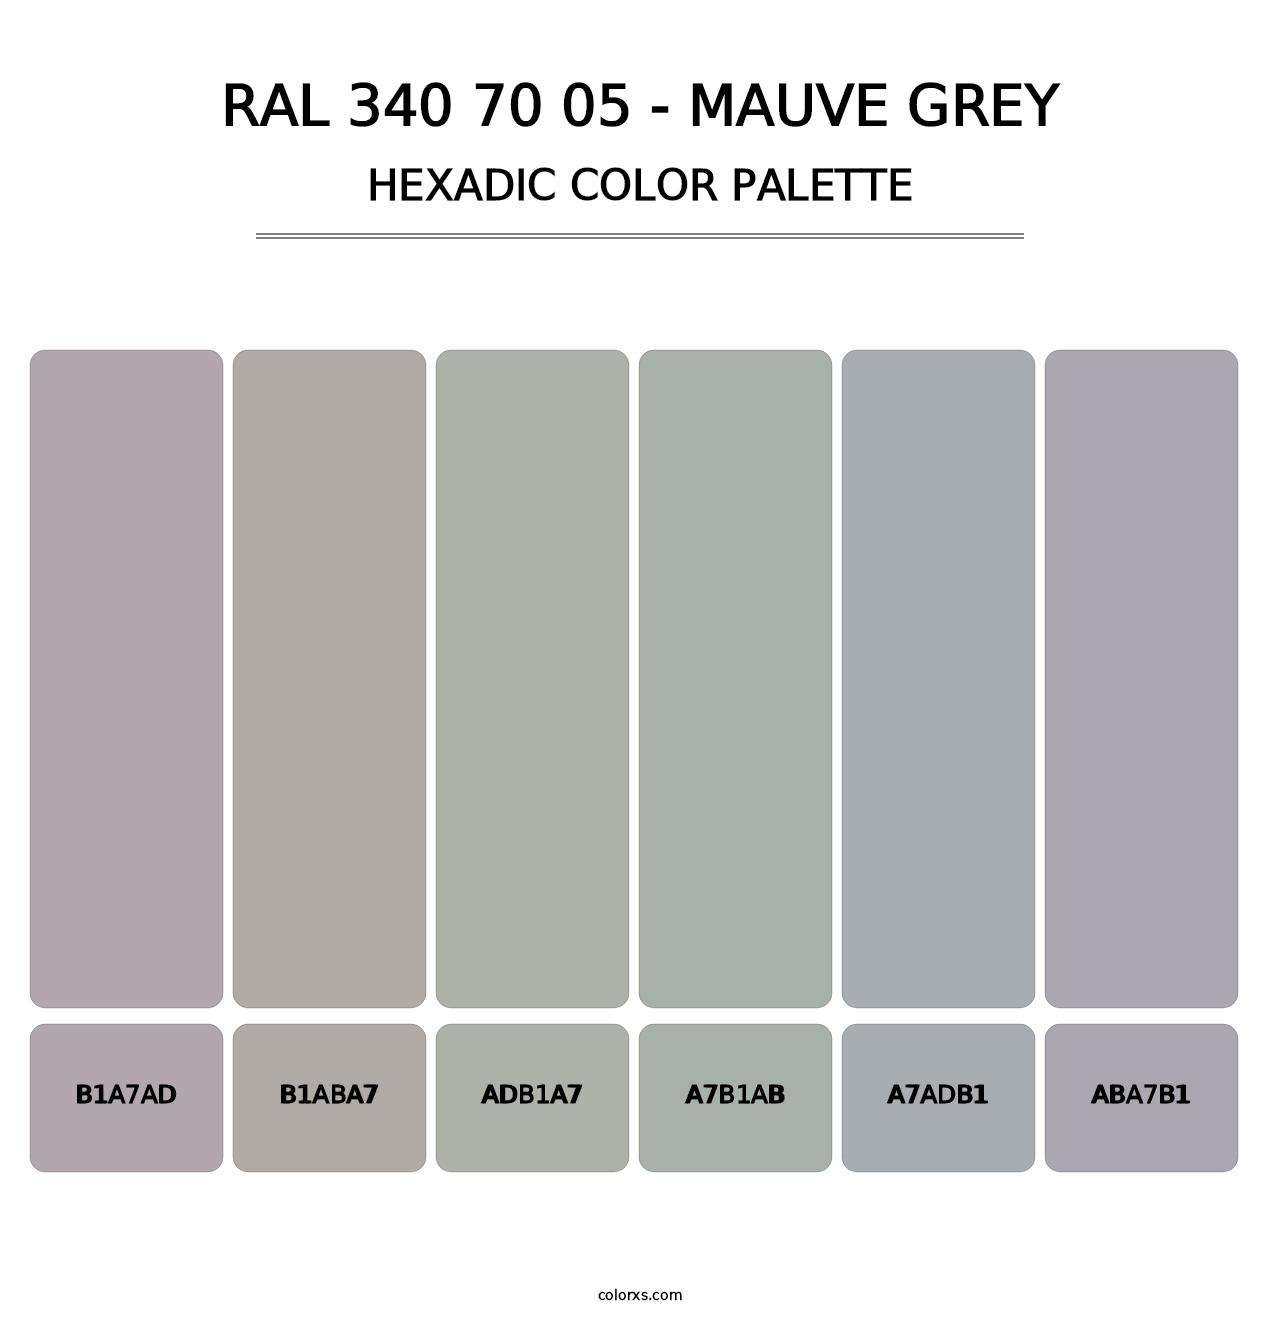 RAL 340 70 05 - Mauve Grey - Hexadic Color Palette